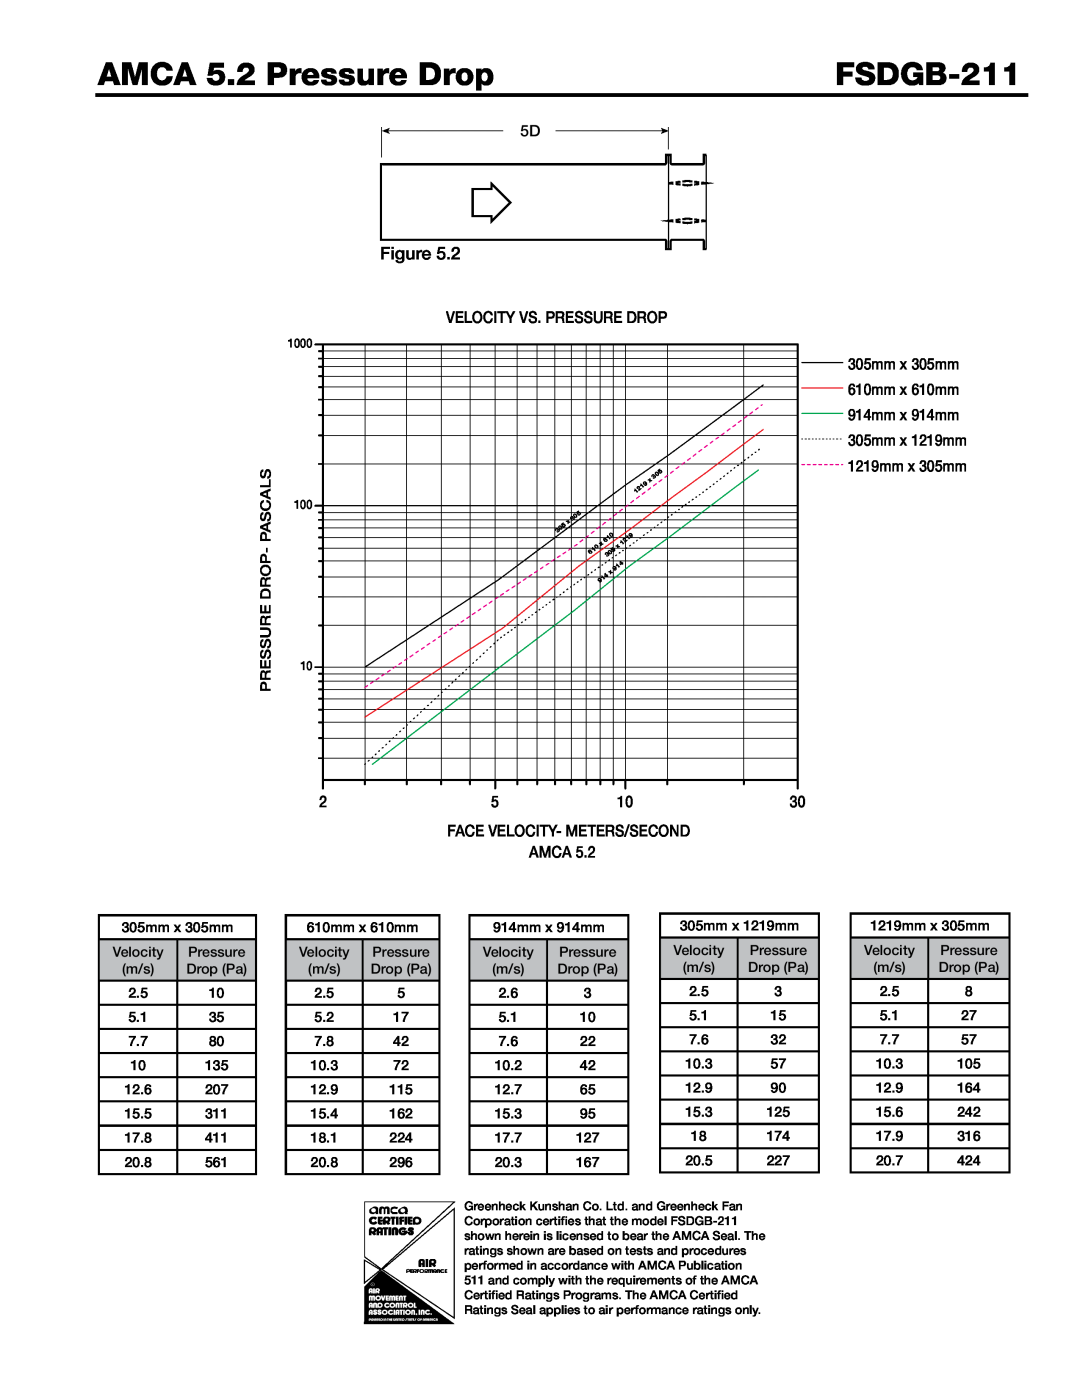 Greenheck Fan FSDGB-211 dimensions AMCA 5.2 Pressure Drop, 14$%30113&4463&, $&7&-0$*5.&5&344&$0/%, $ 